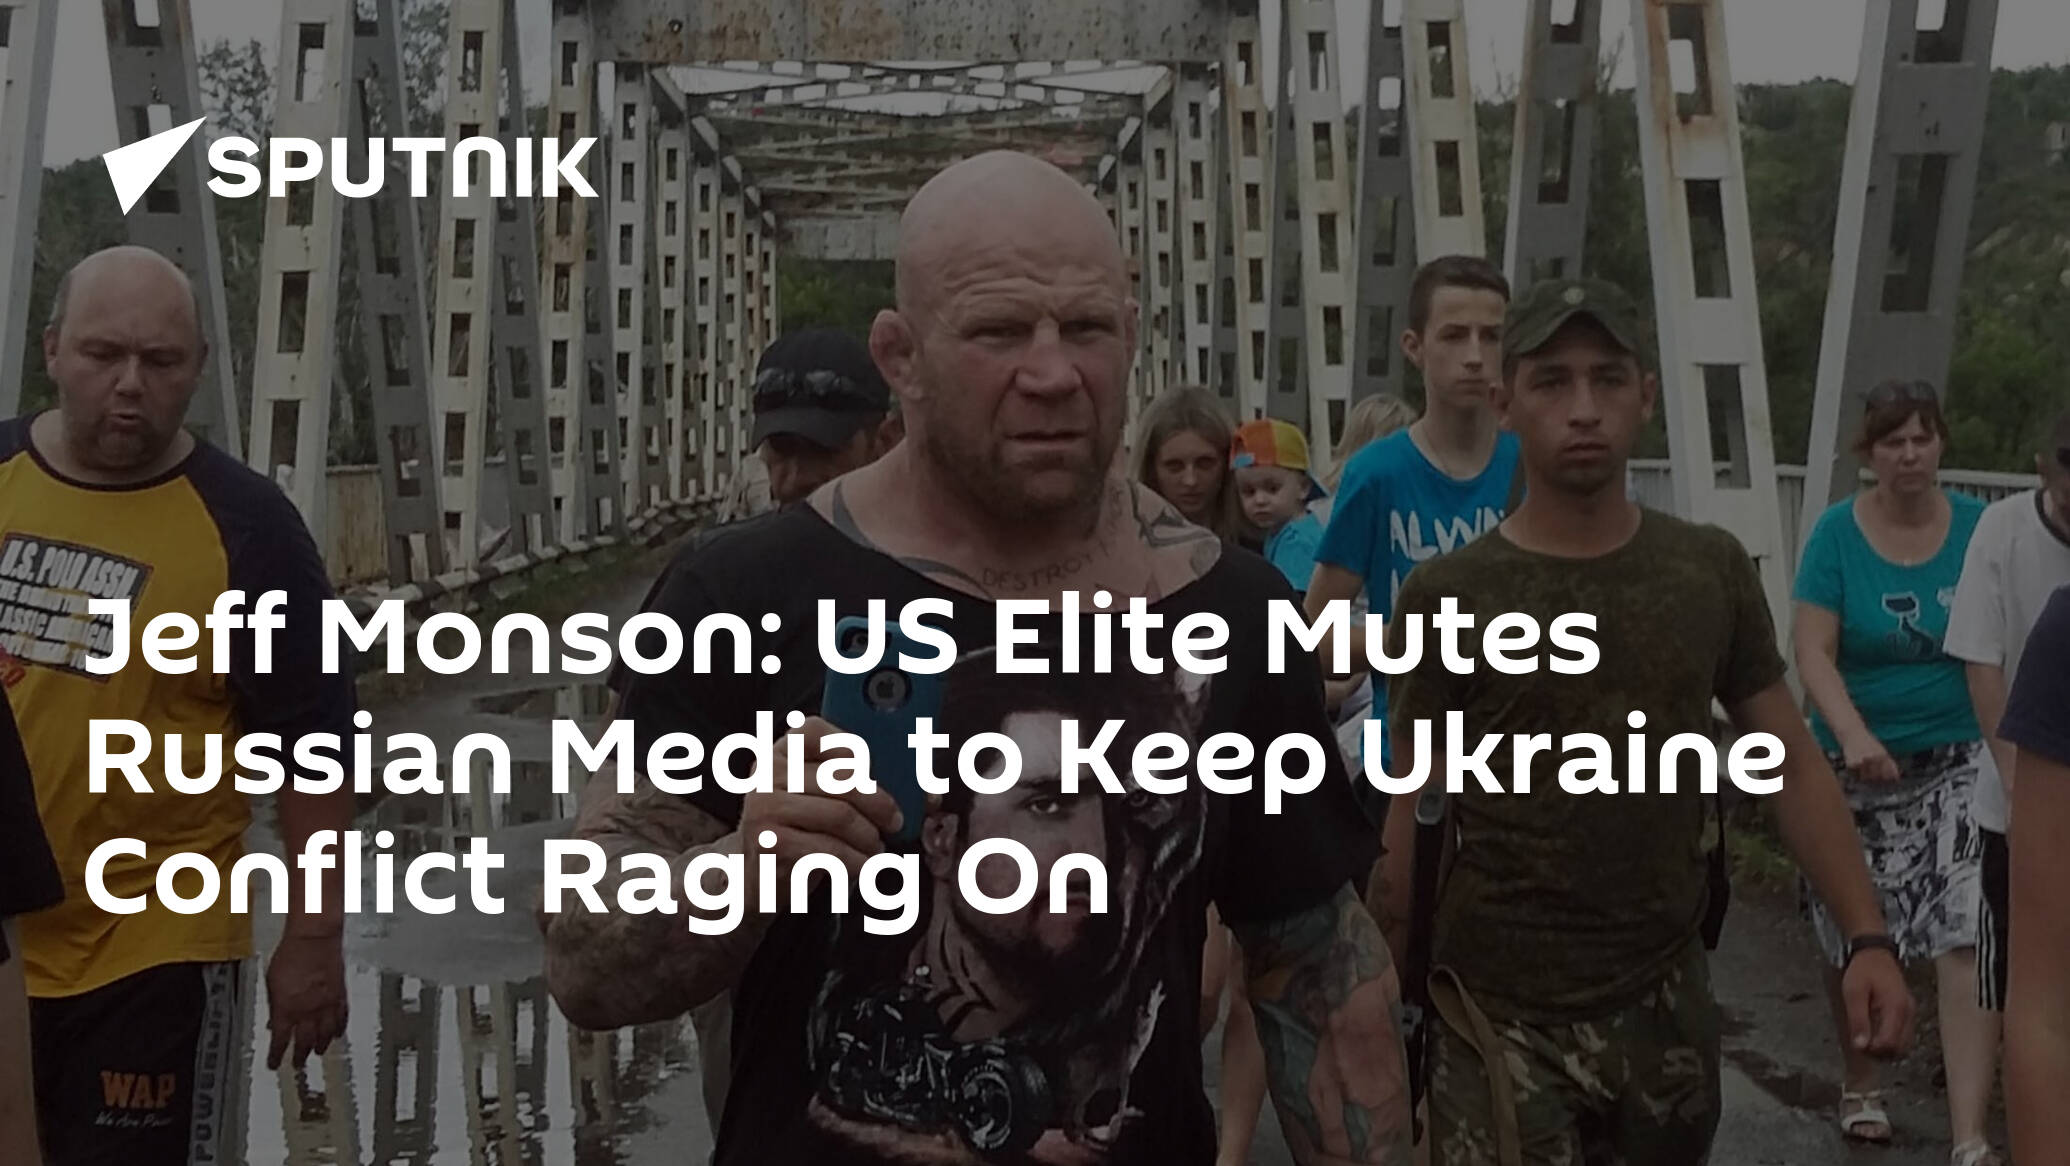 Jeff Monson: US Elite Mutes Russian Media to Keep Ukraine Conflict Raging On